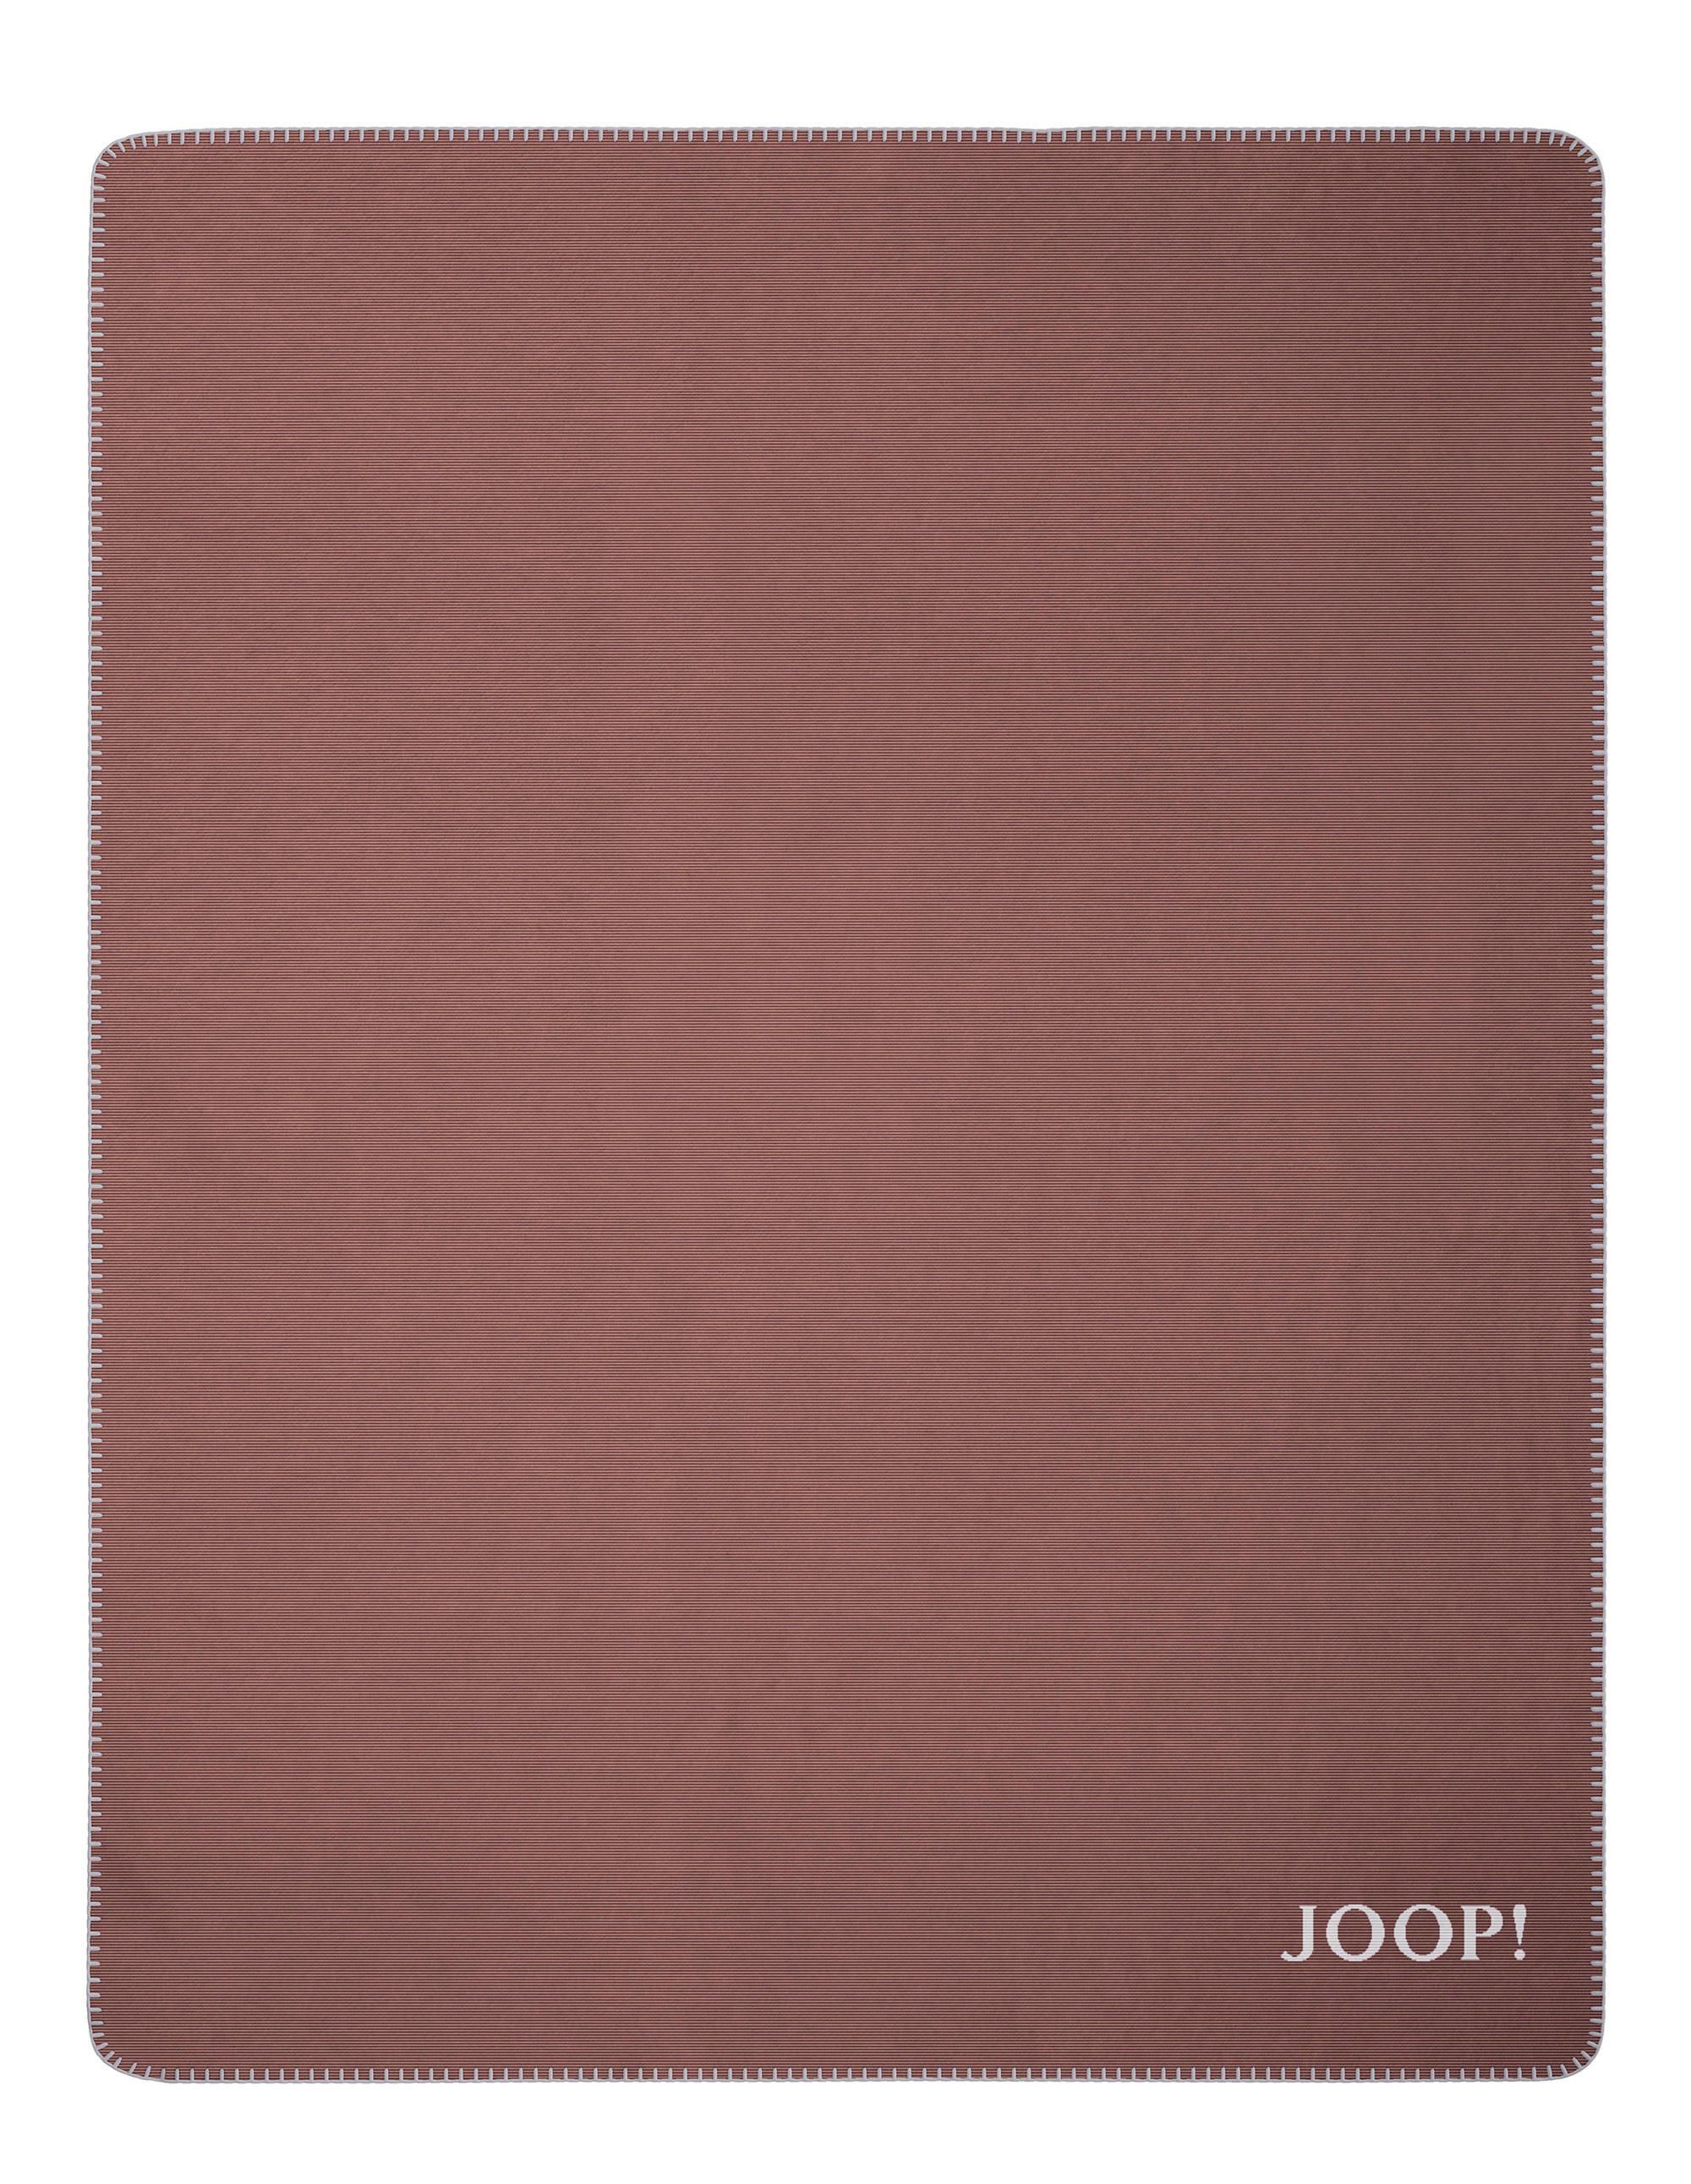 WOHNDECKE Melange Doubleface 150/200 cm  - Naturfarben/Orange, Design, Textil (150/200cm) - Joop!